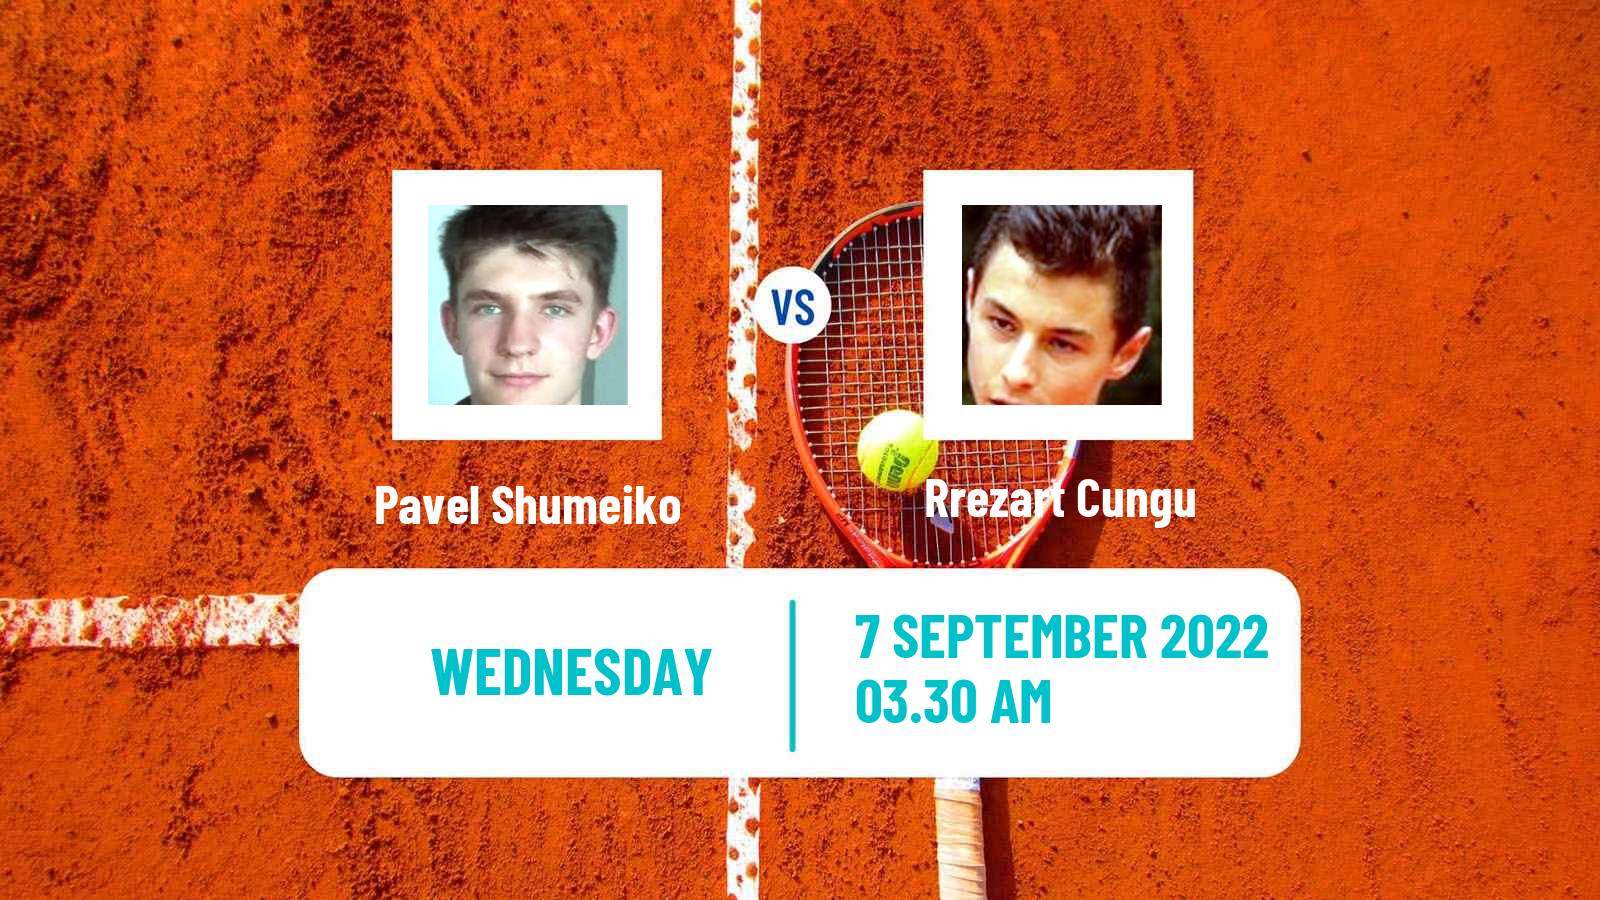 Tennis ITF Tournaments Pavel Shumeiko - Rrezart Cungu